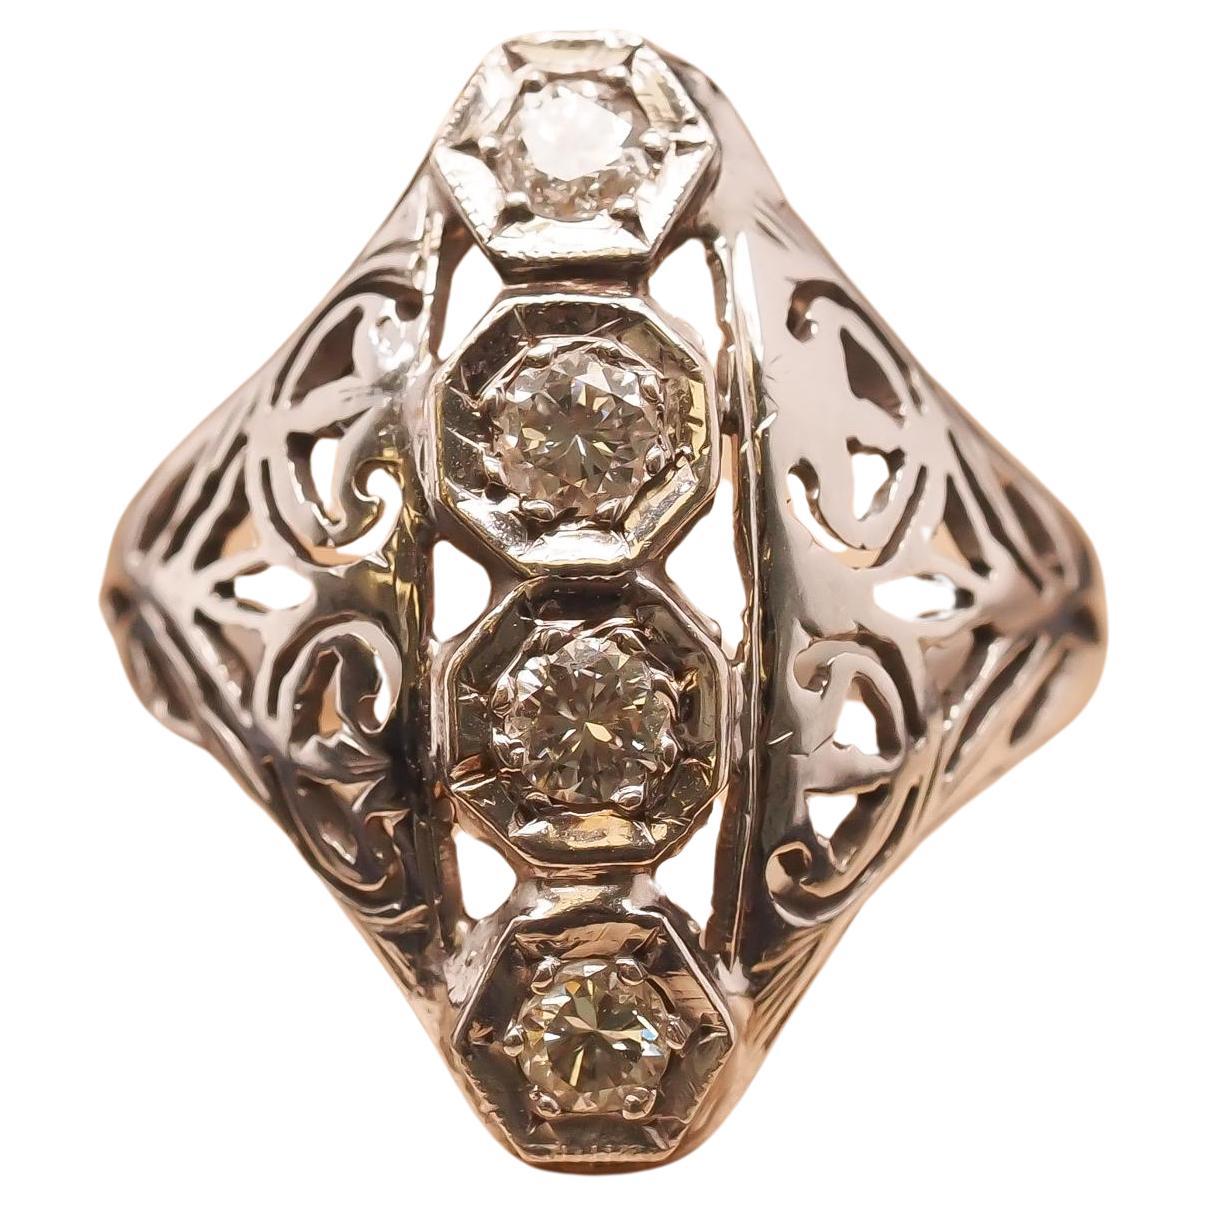 Circa 1930s Art Deco 18K Old European Diamond Shield Ring